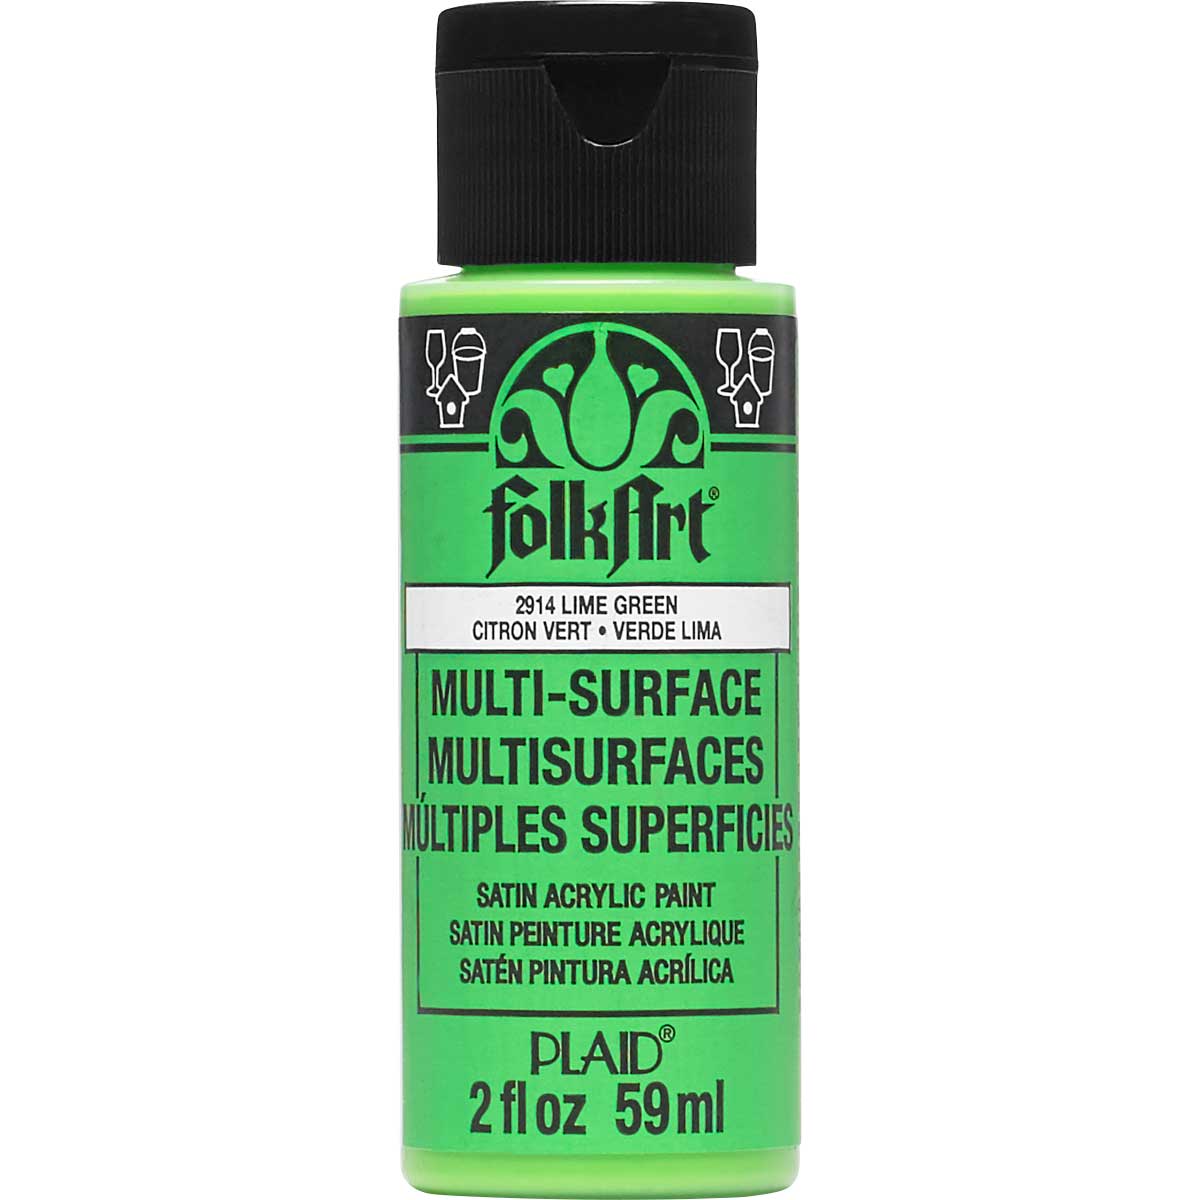 FolkArt ® Multi-Surface Satin Acrylic Paints - Lime Green, 2 oz. - 2914